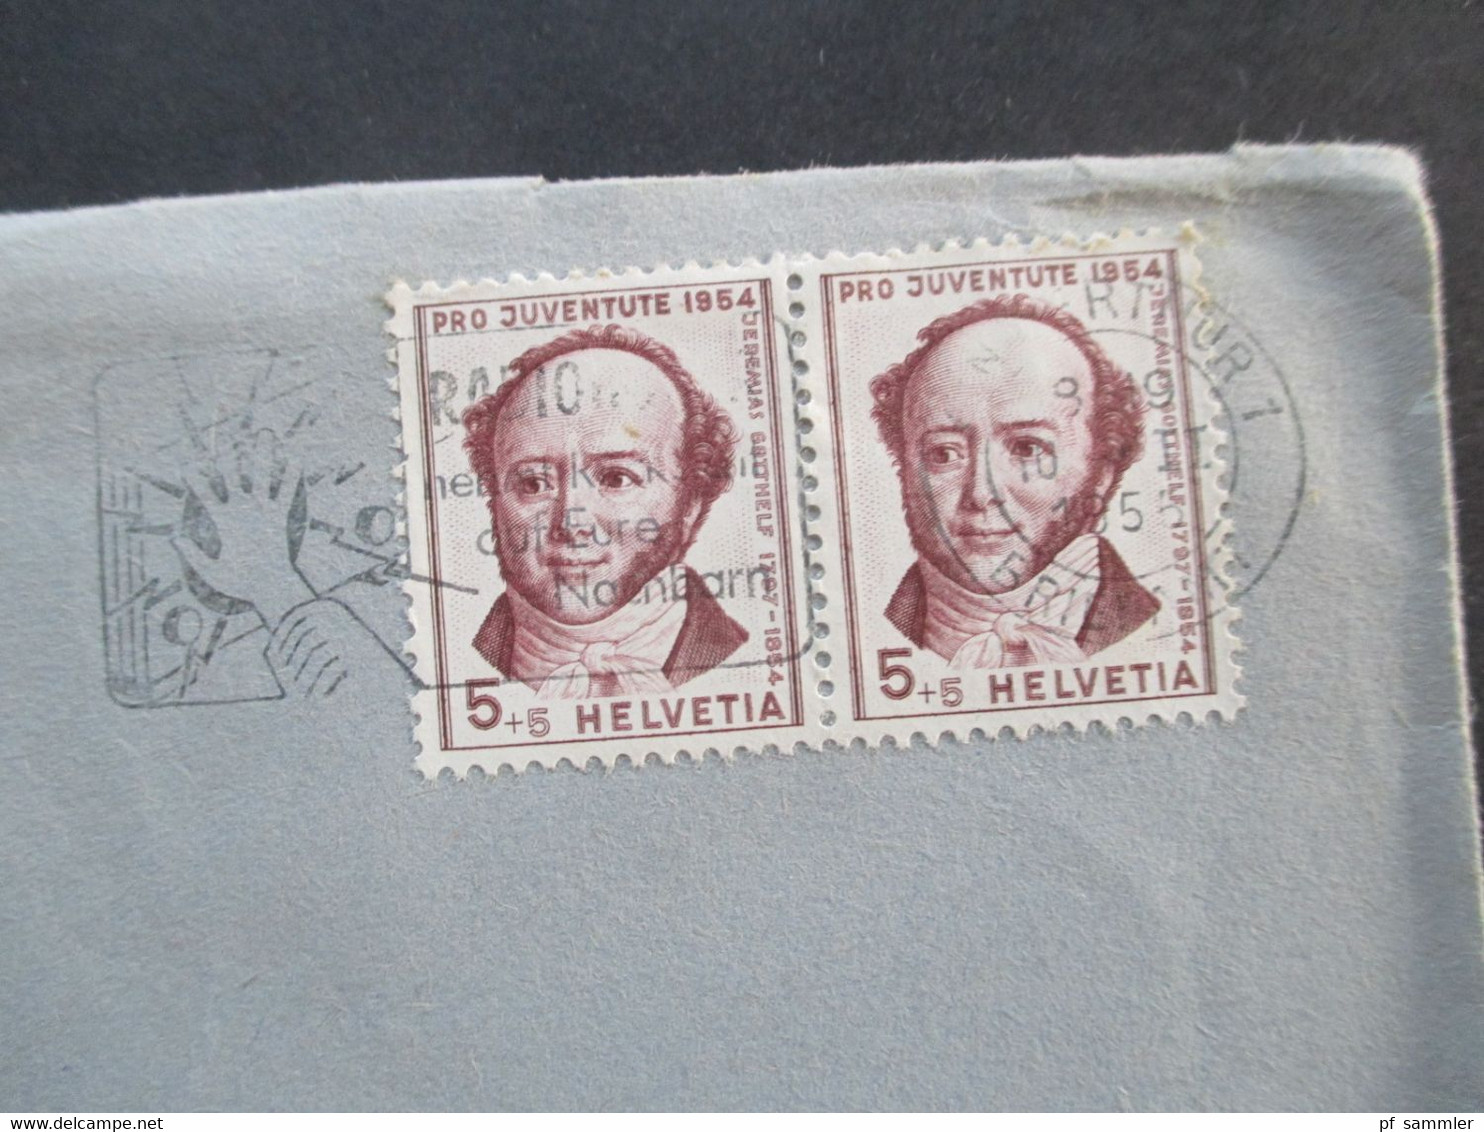 Schweiz 1955 Pro Juventute Nr. 602 MeF Waagerechtes Paar Umschlag Ed. Bühler & Co Winterthur Ortsbrief - Covers & Documents